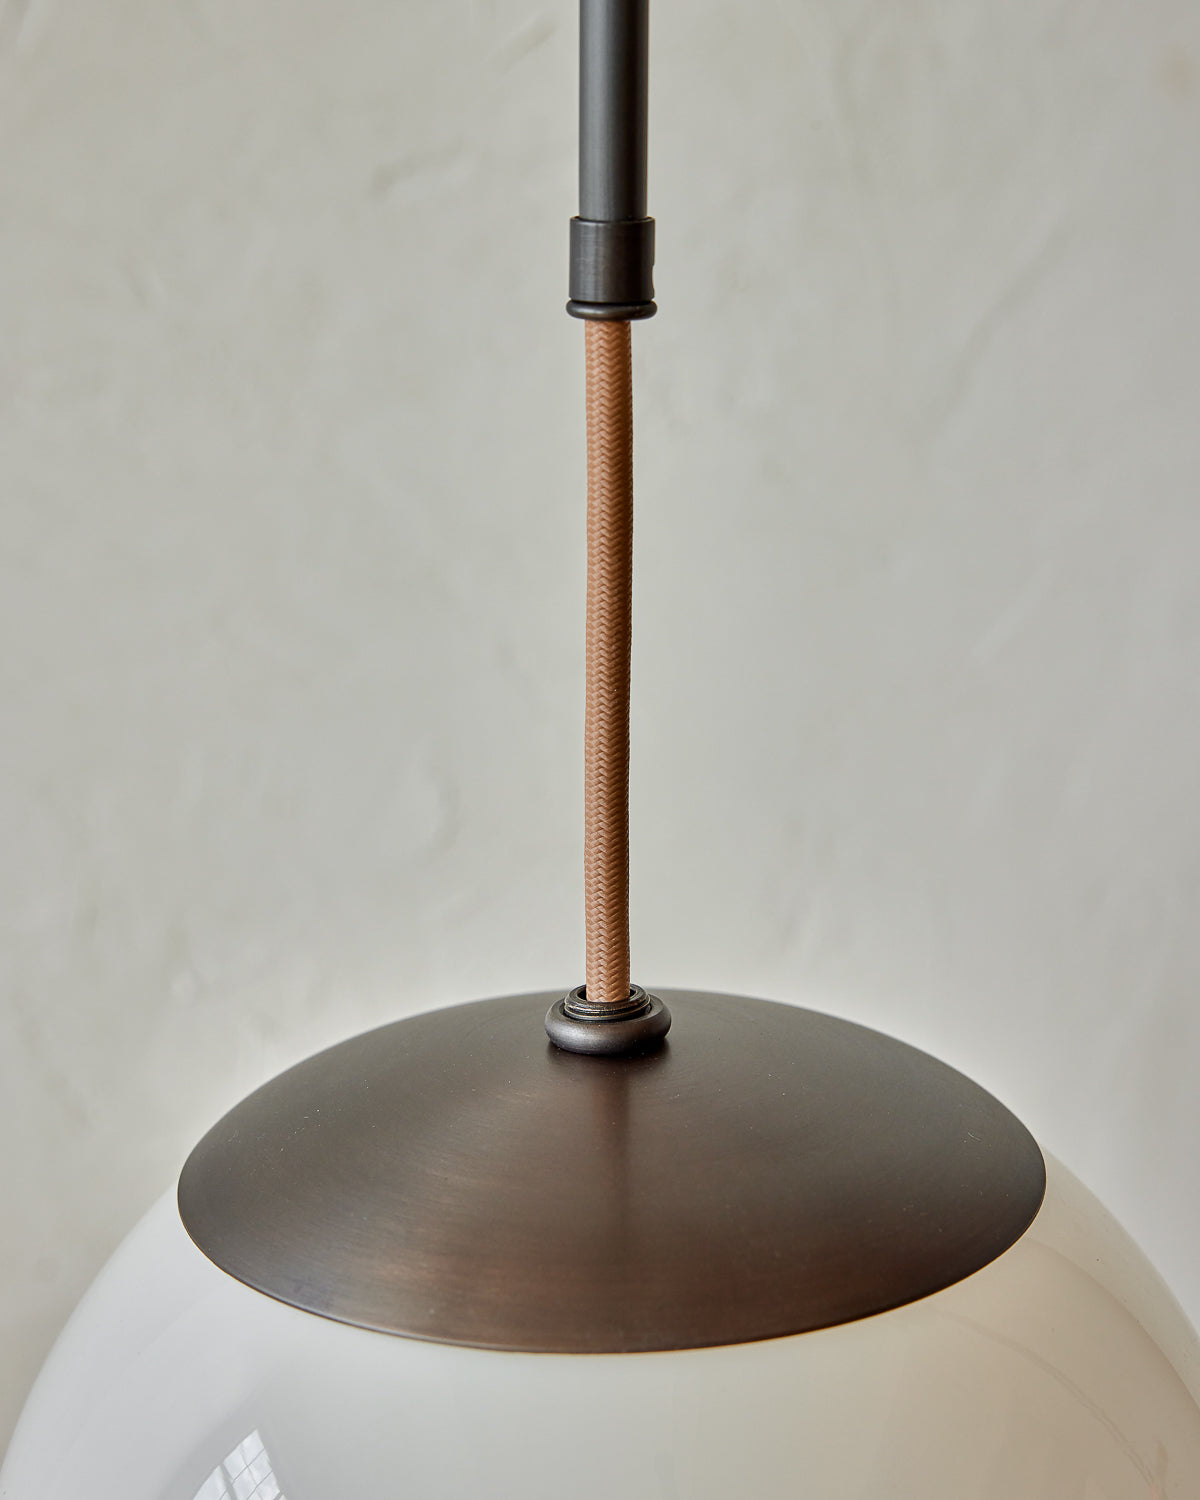 Modern black globe pendant light with dark oil rubbed brass curved body and white milk glass globe